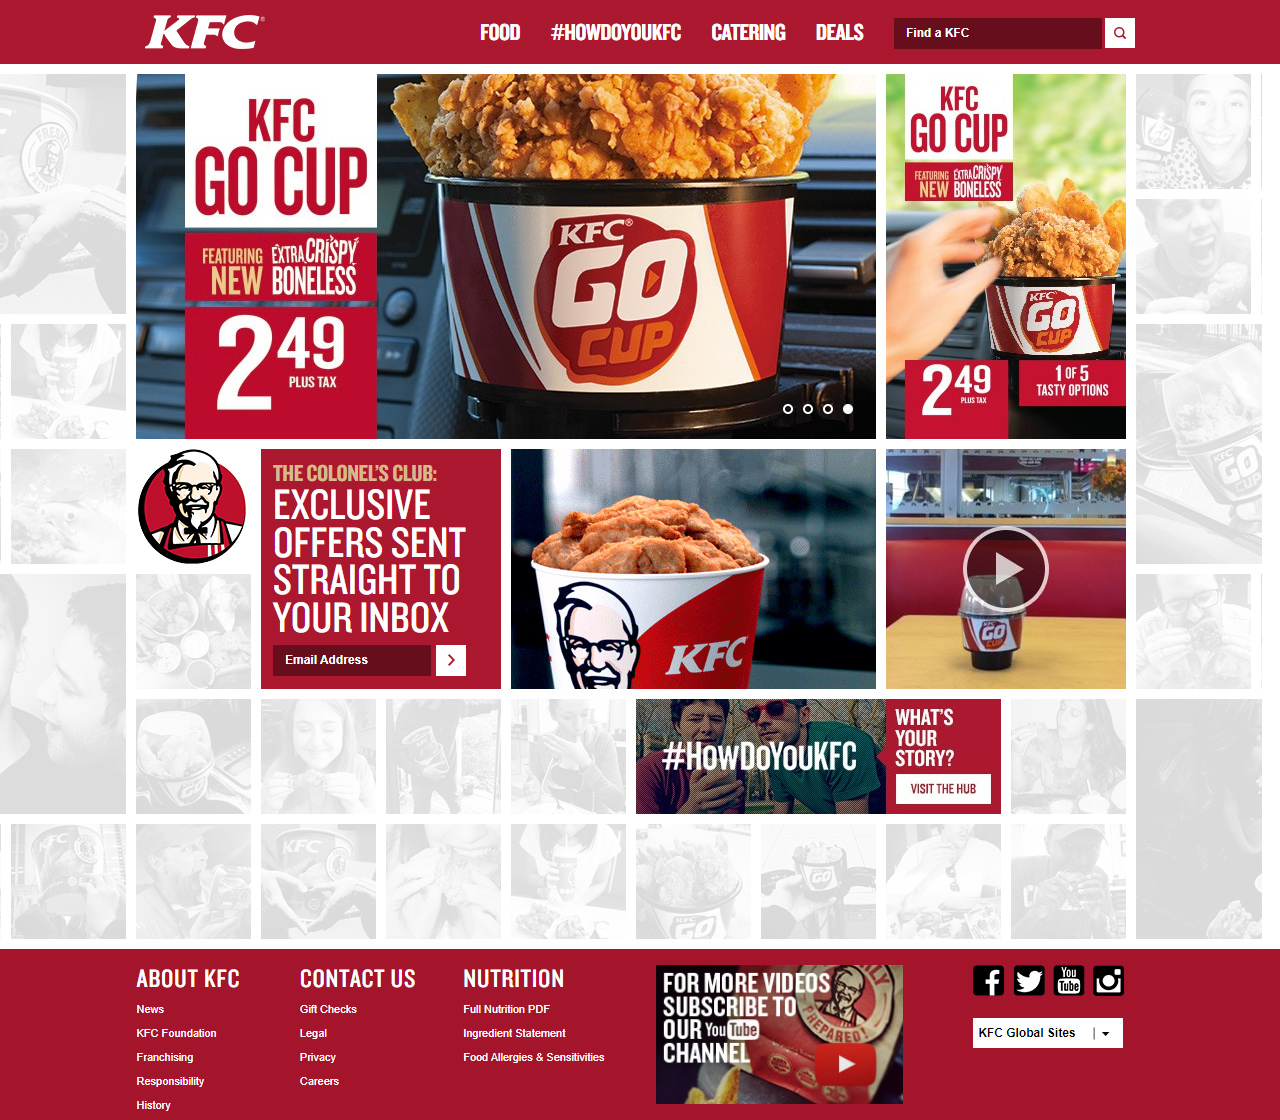 KFC website in 2013